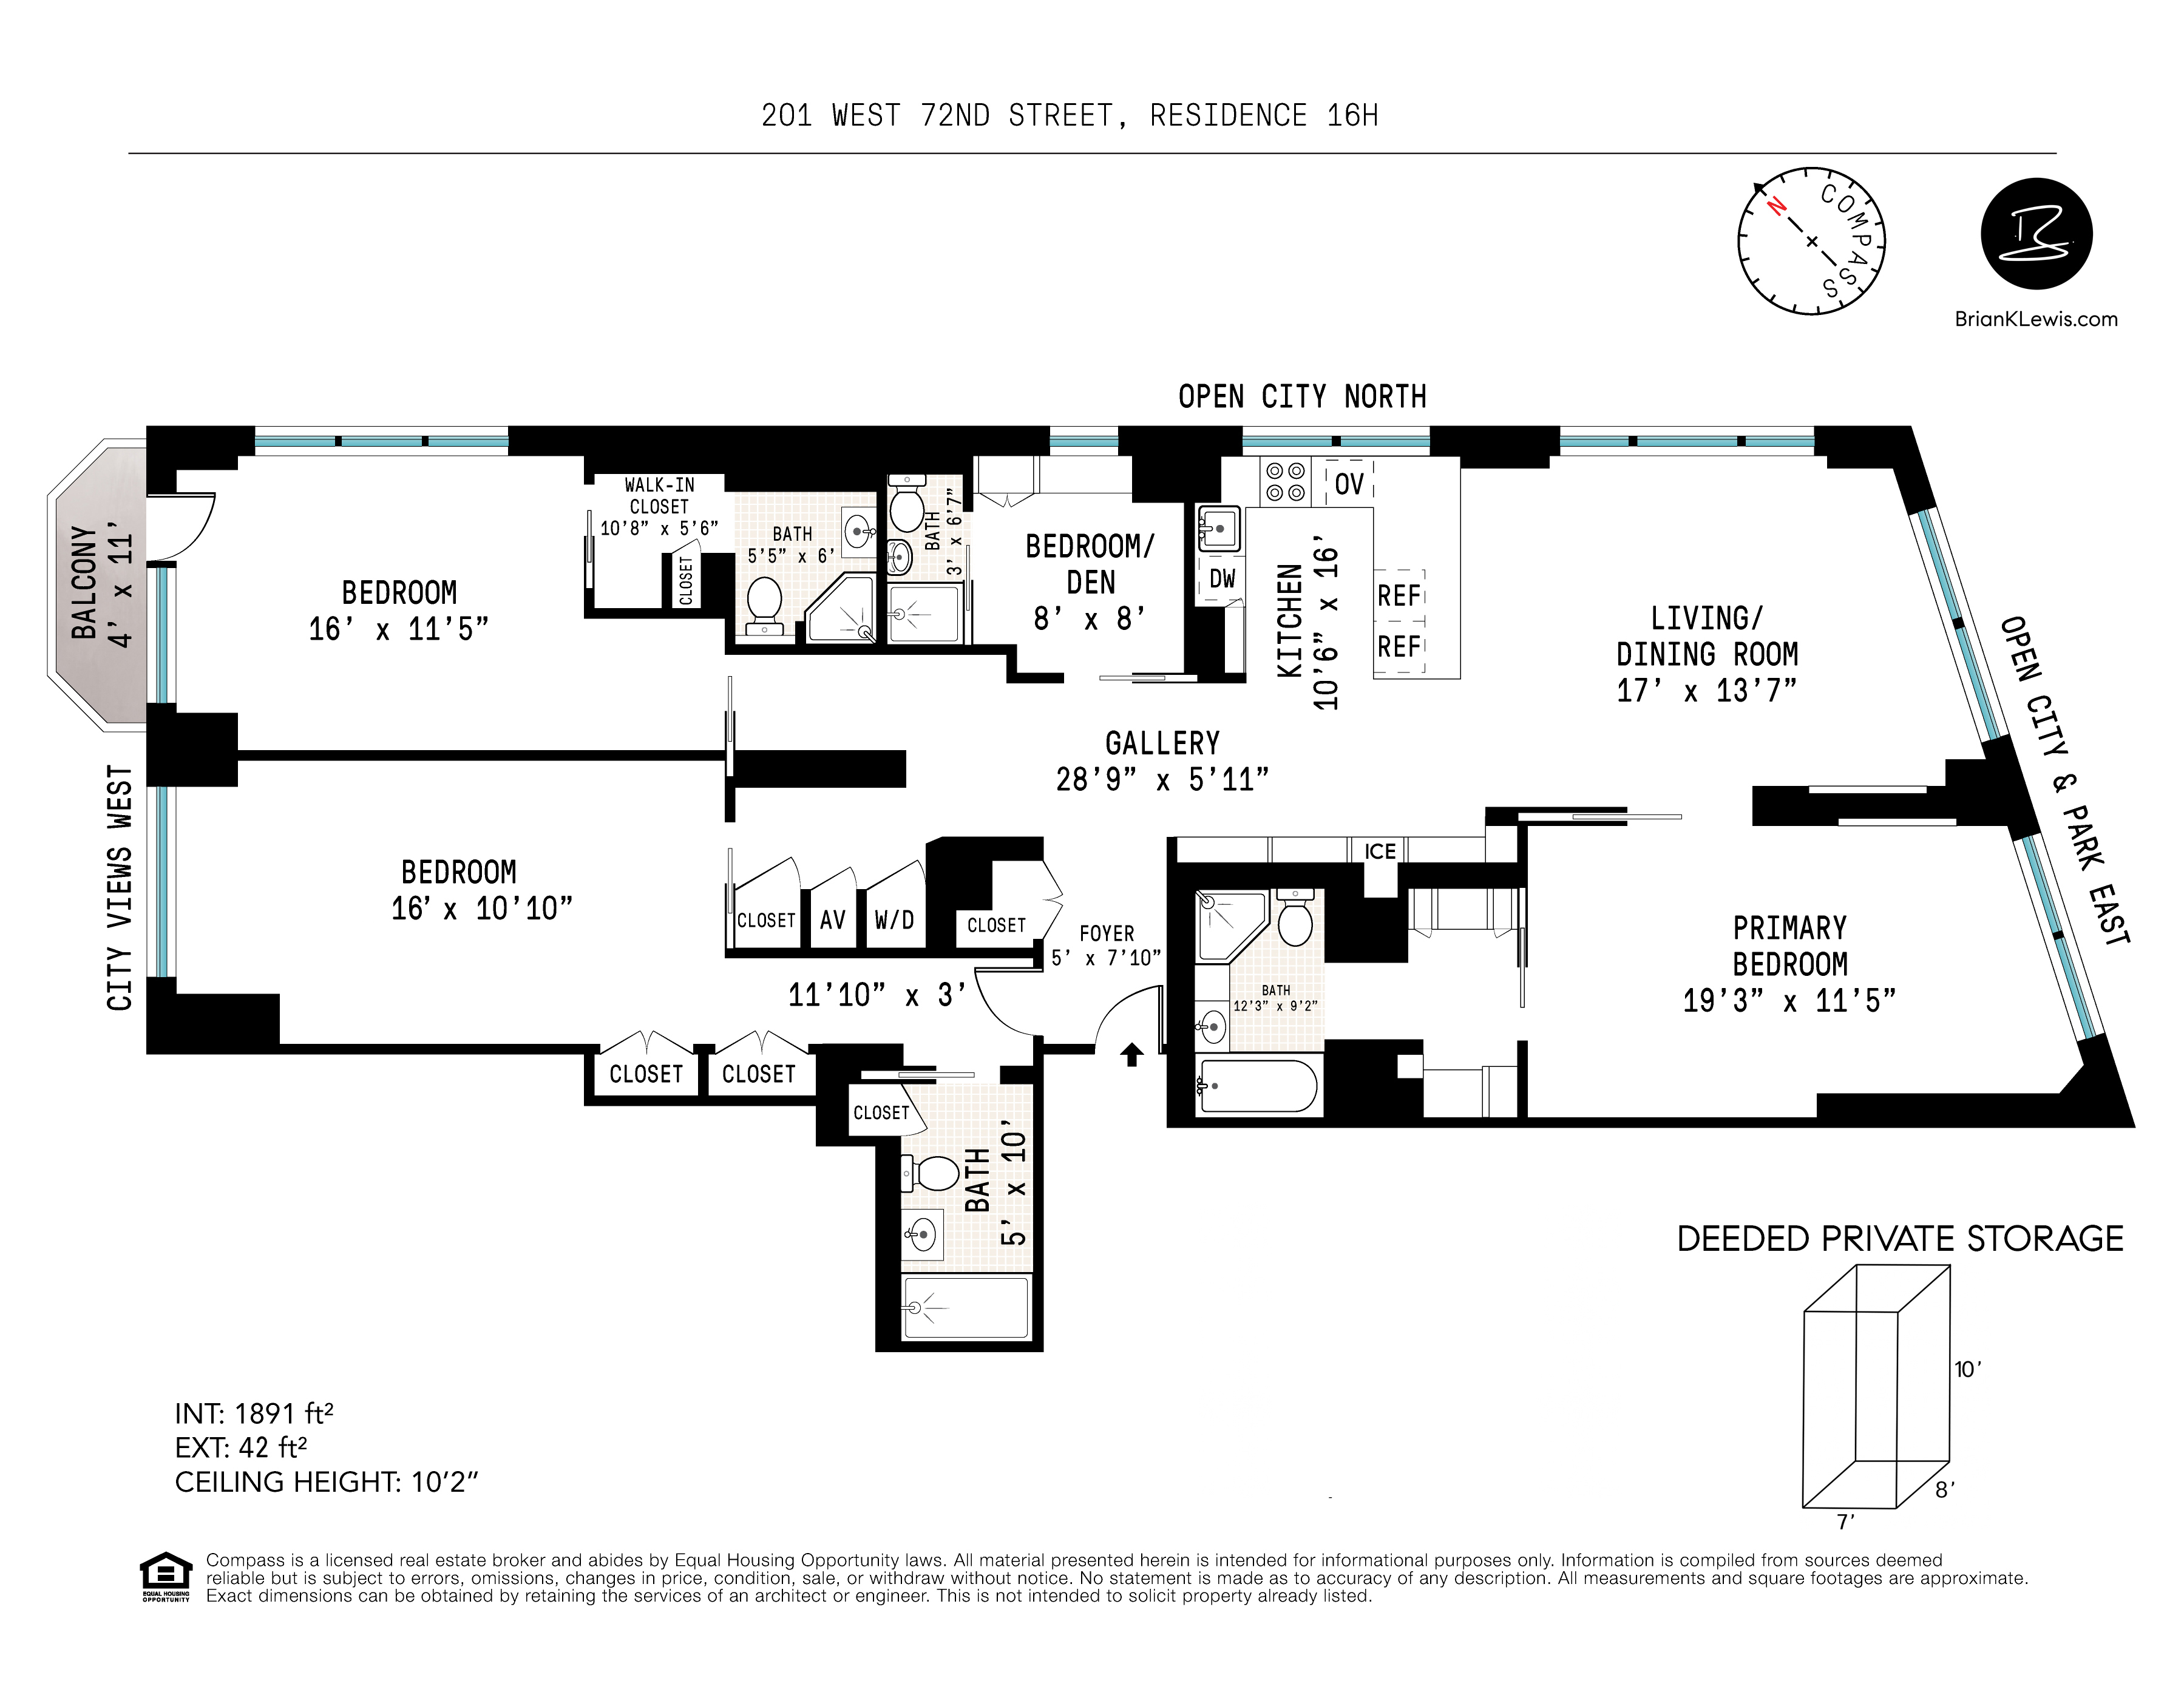 Floorplan for 201 West 72nd Street, 16H